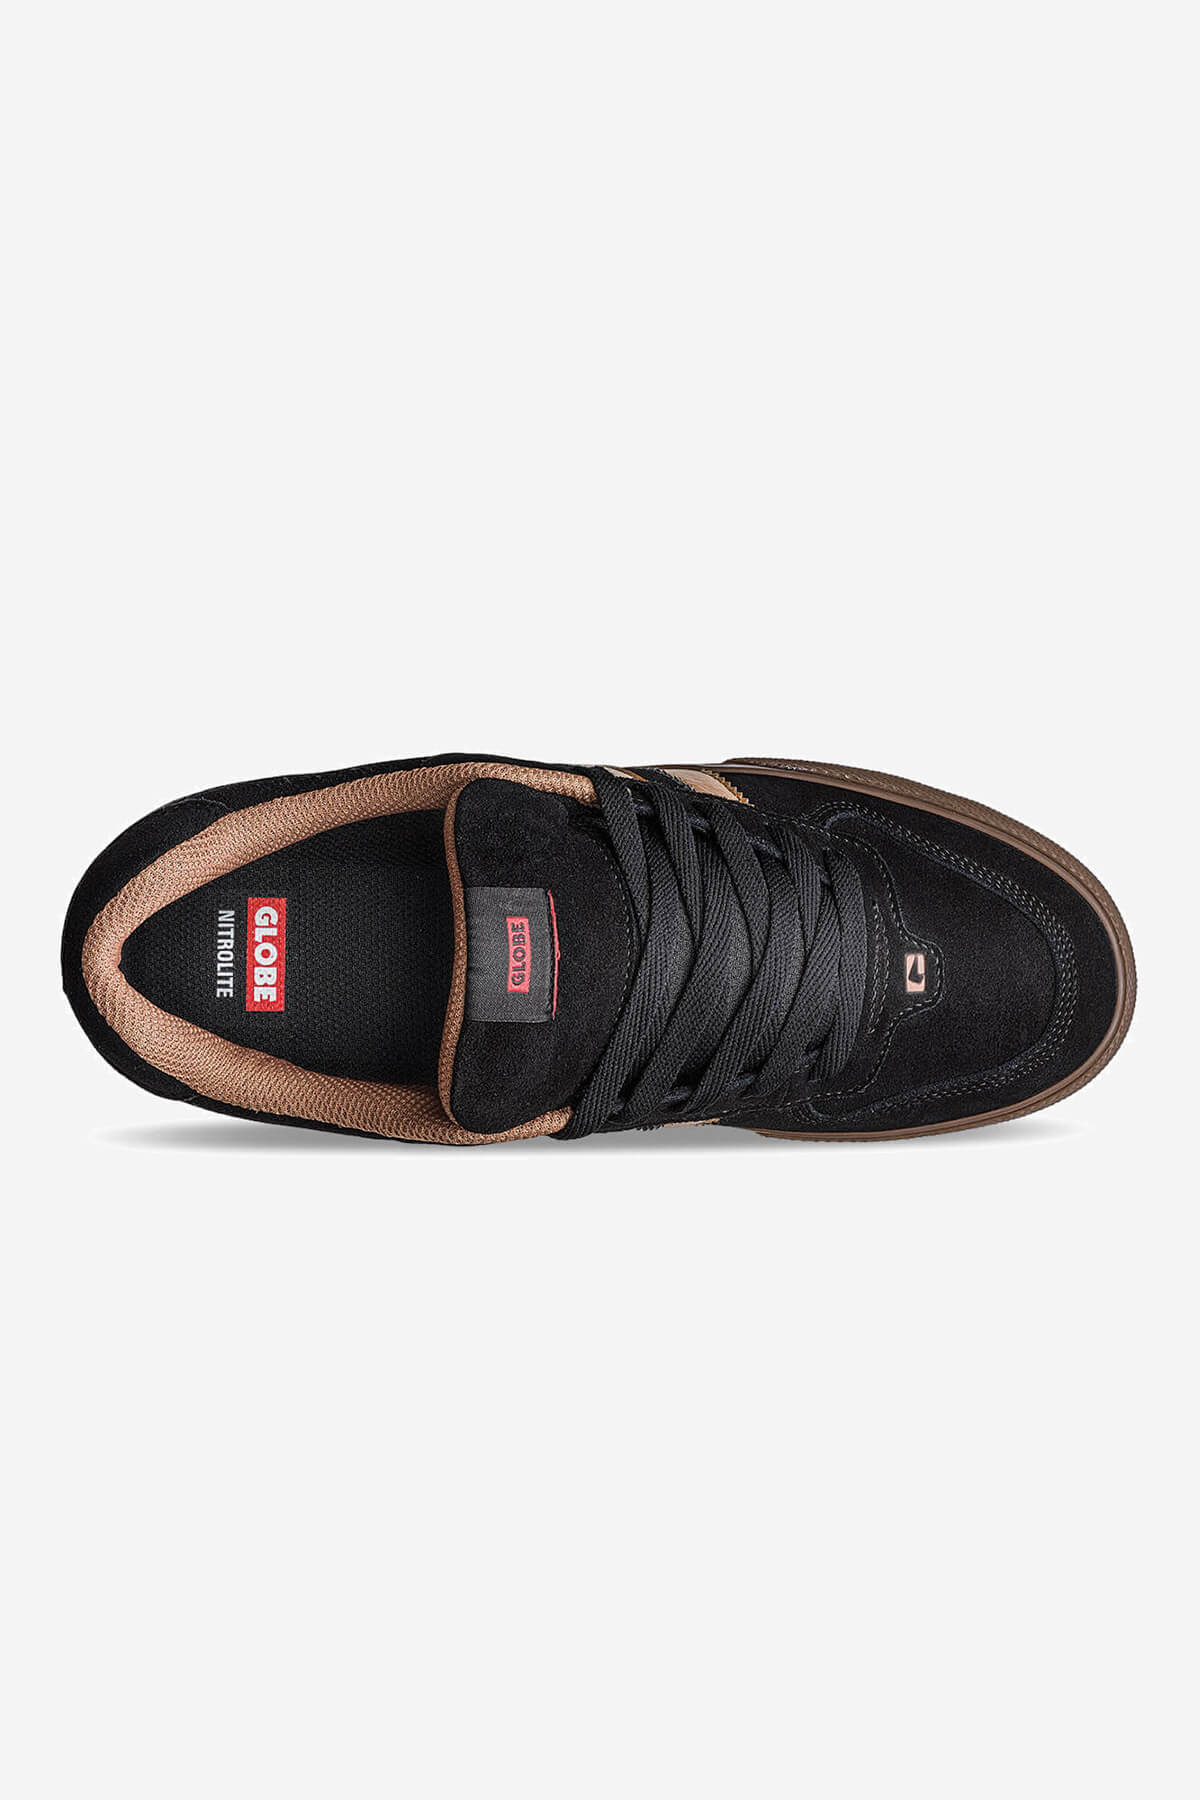 encore-2 black brown skate shoes